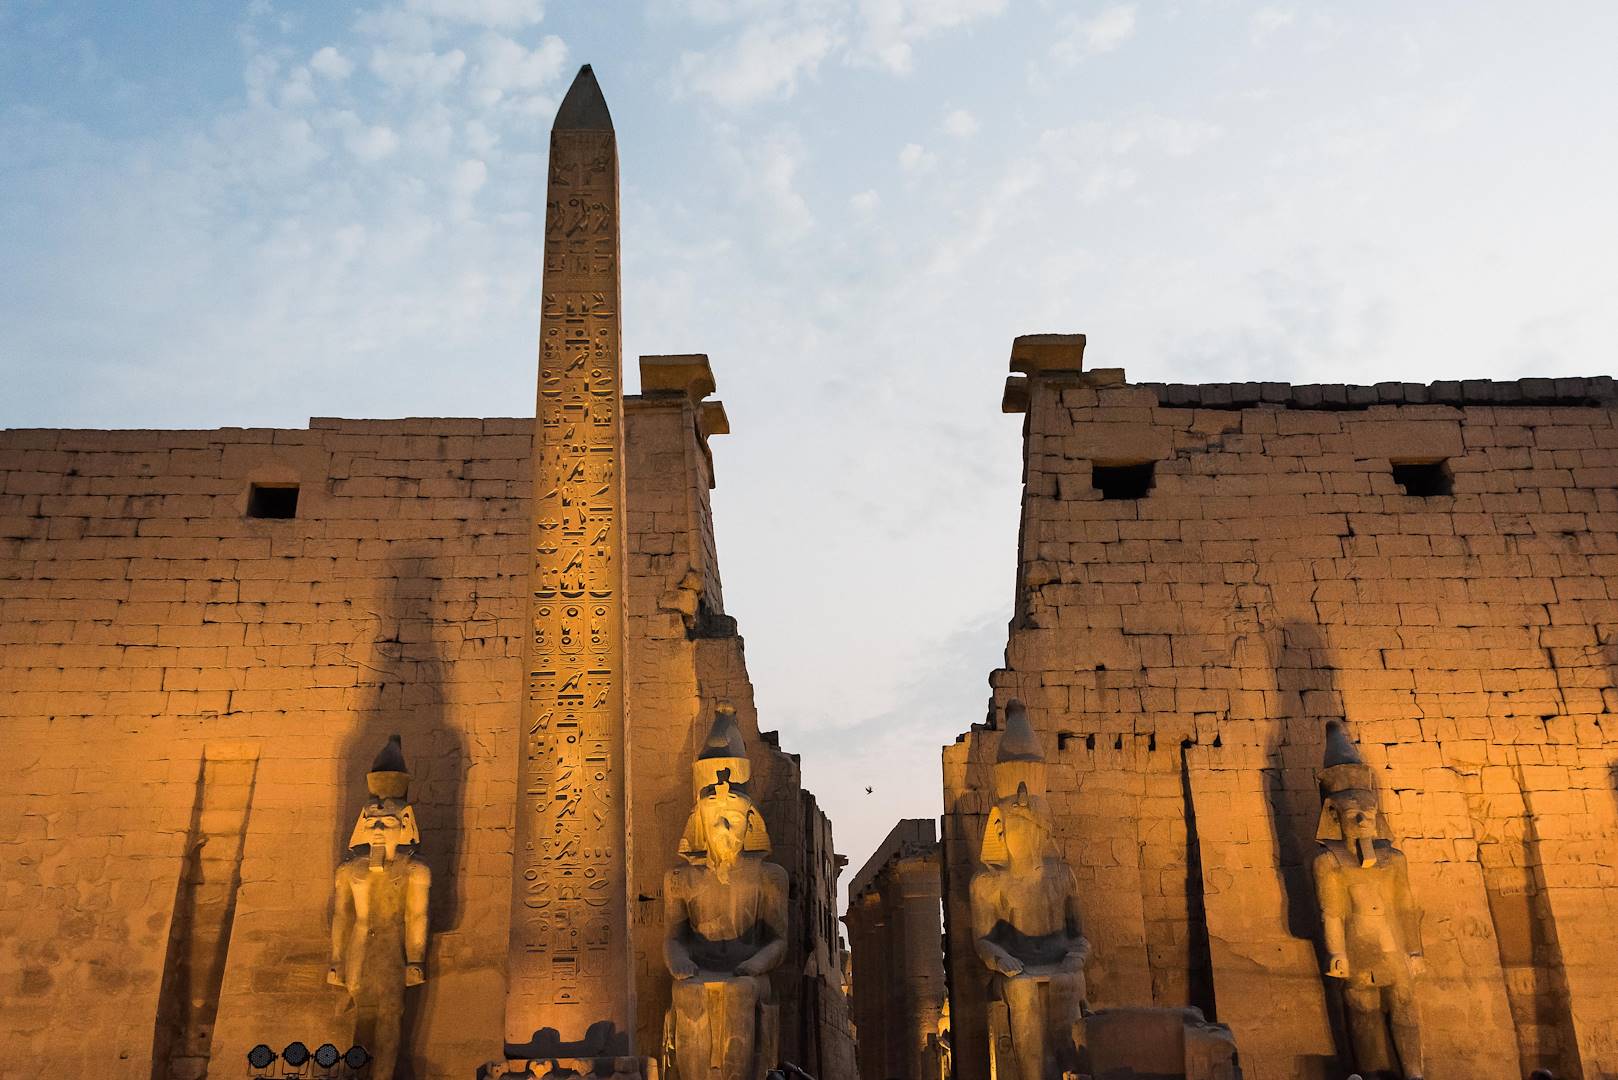 Le Temple d'Amon illuminé - Louxor - Égypte